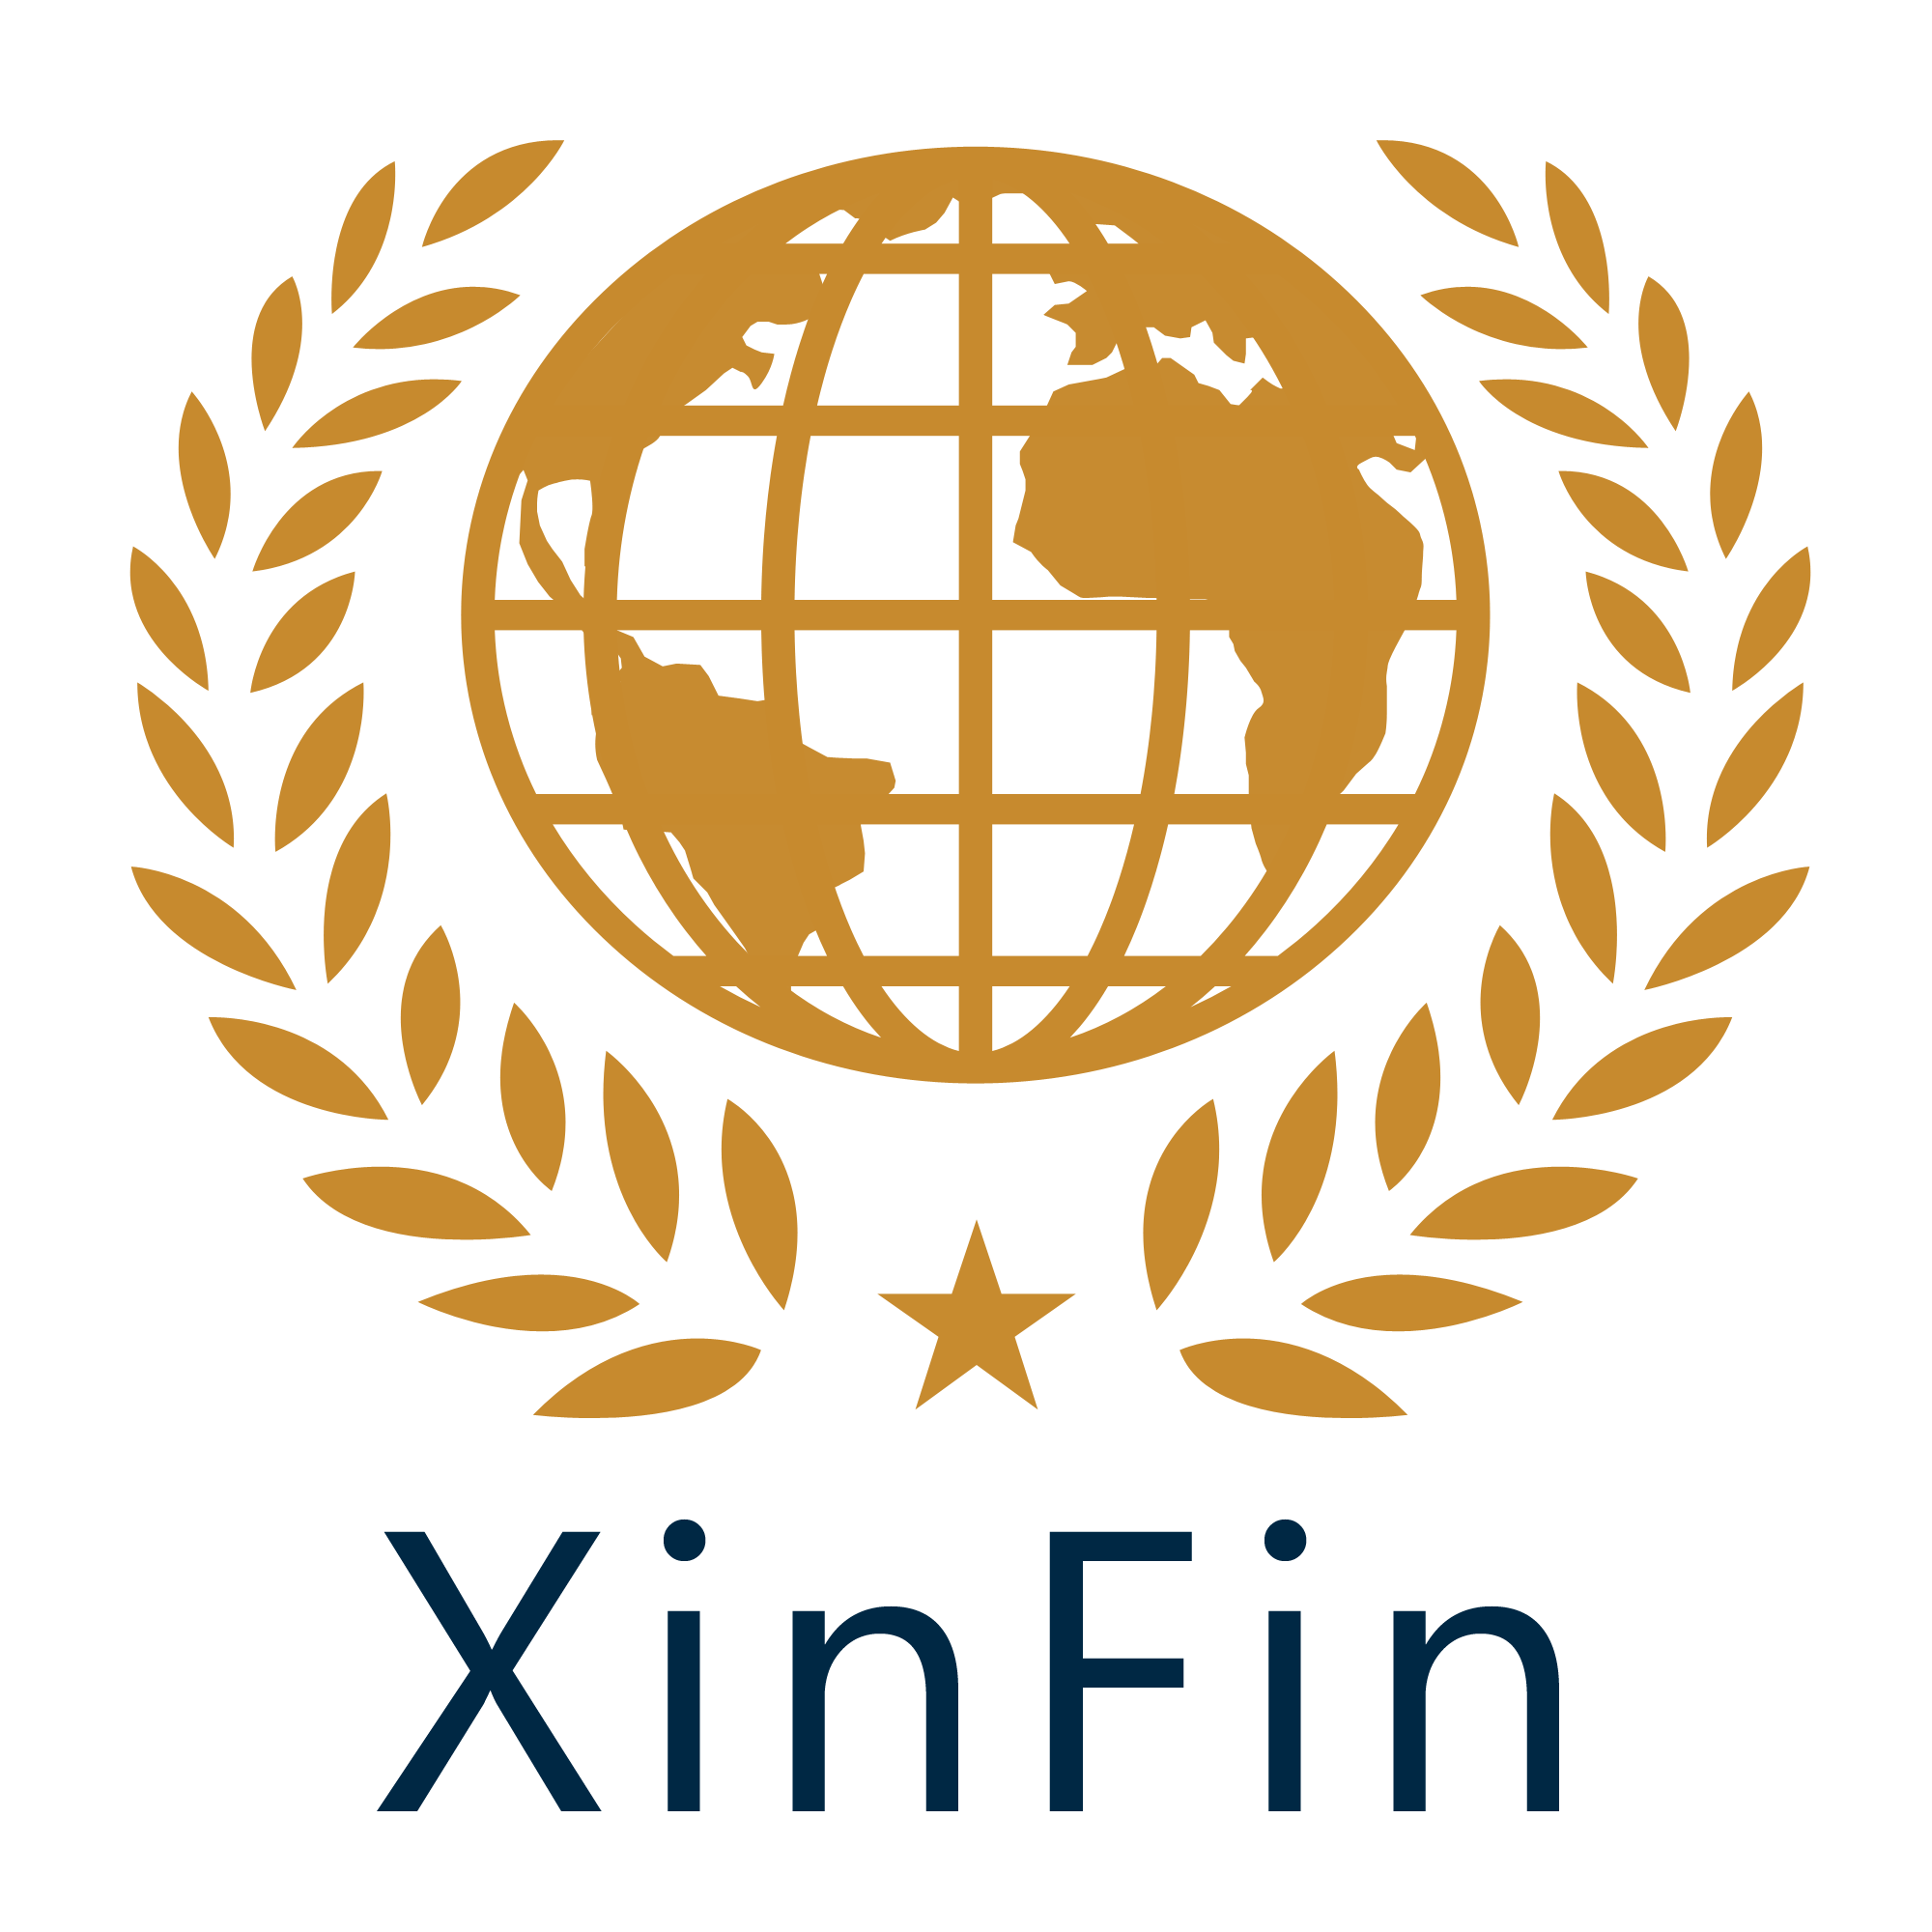 XinFin Logo